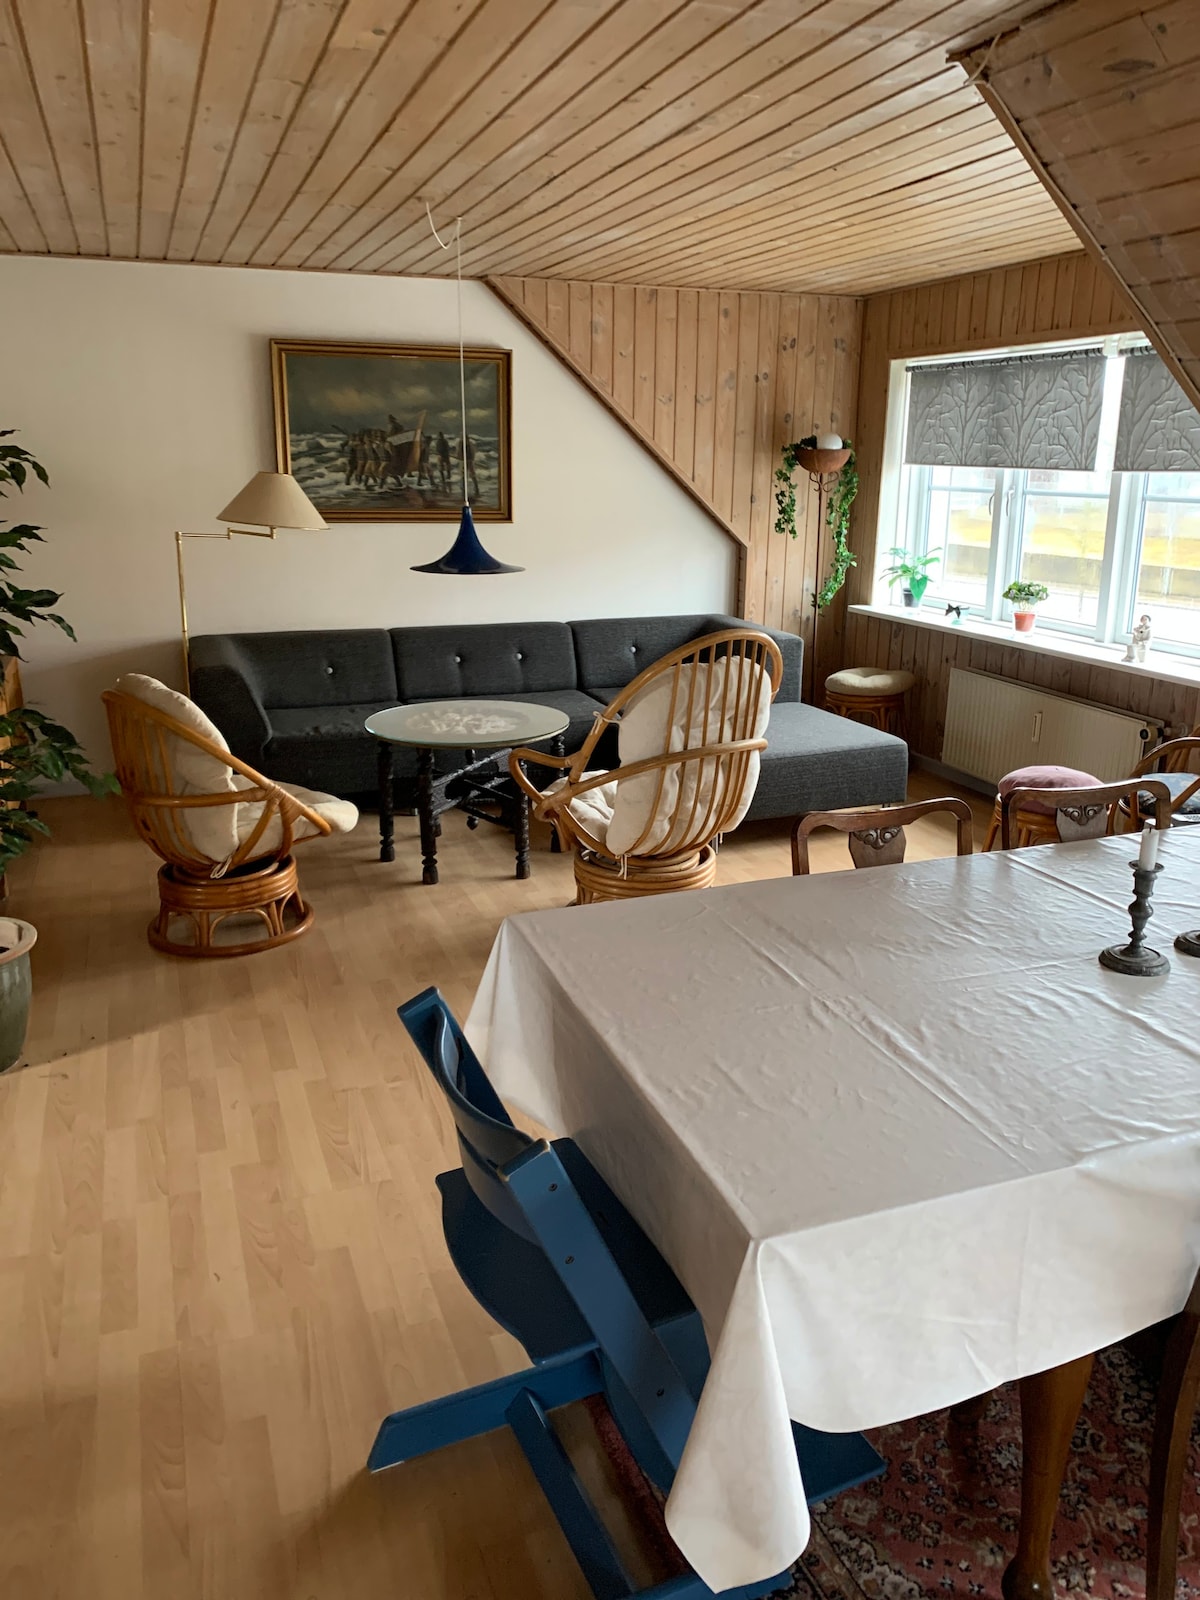 Gjerlev J Vuokrattavat loma-asunnot ja talot - Tanska | Airbnb